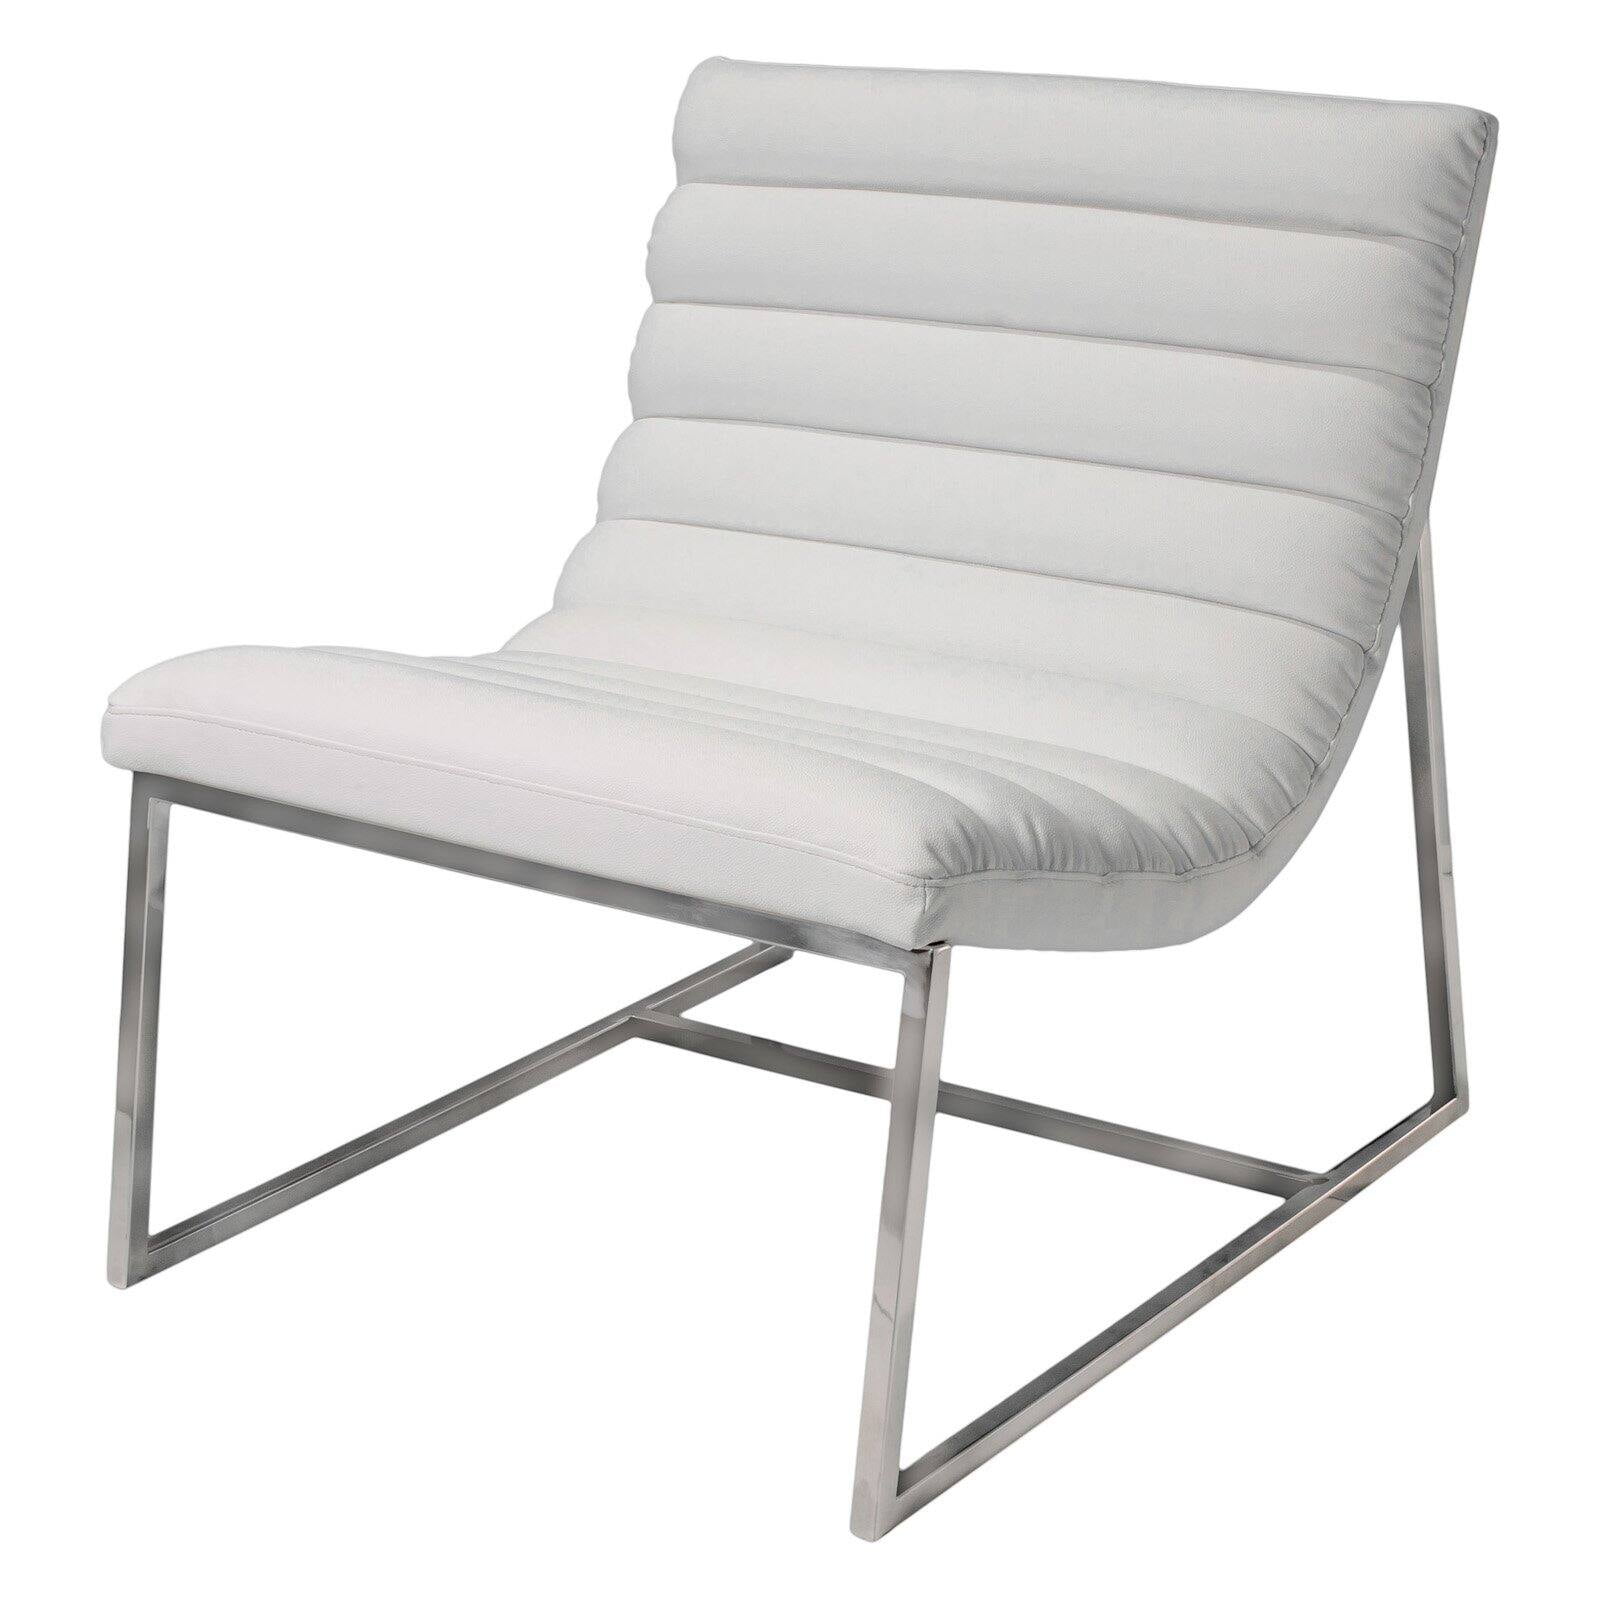 Parisian Leather Sofa Chair White, White Leather Sofa Chair